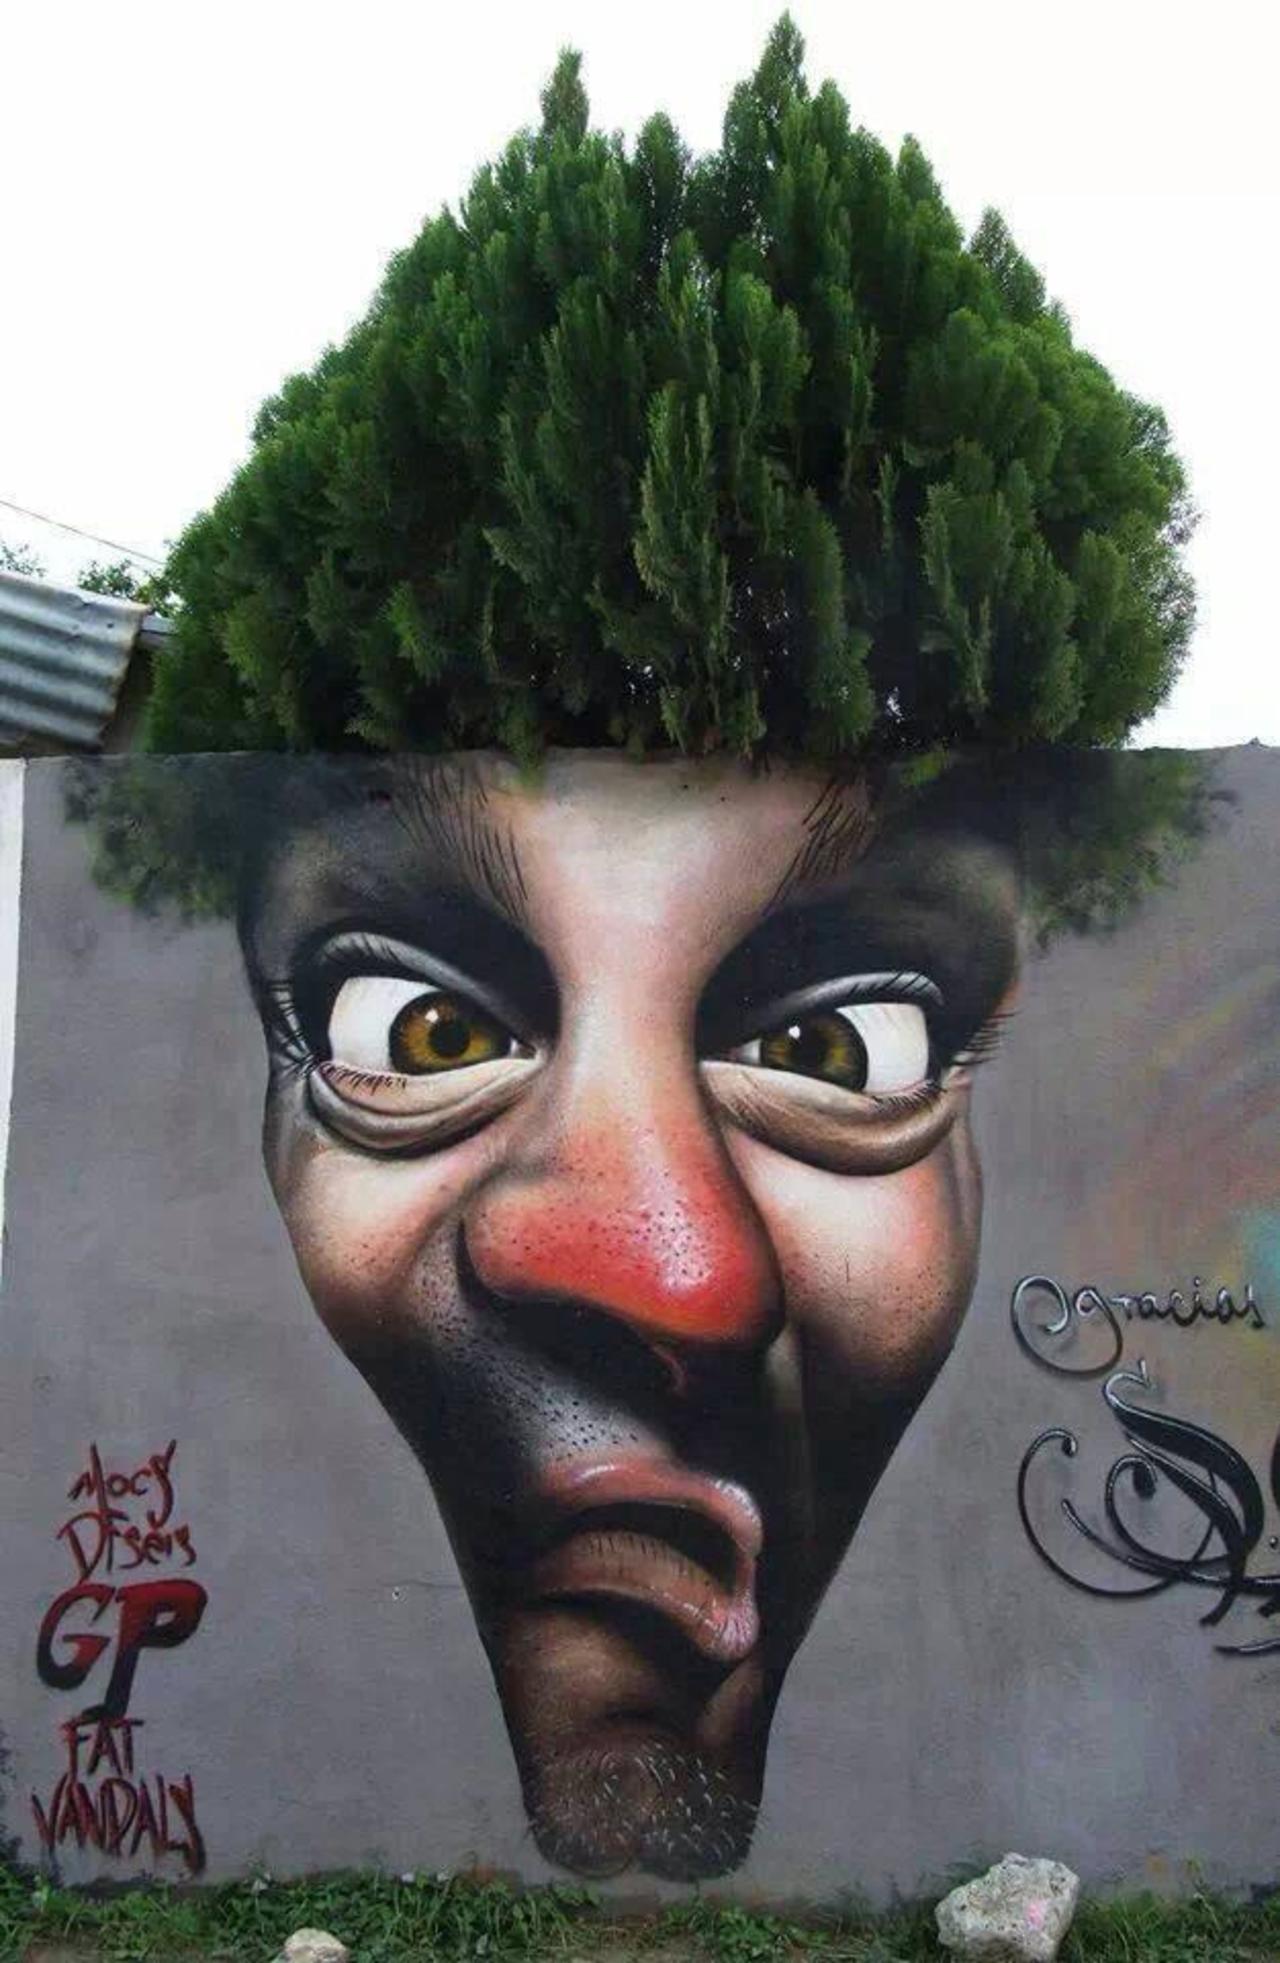 Well.

RT"@GoogleStreetArt: When Street Art meets nature by Mocs Dfseis, GP & Fat Vandals 
#art #graffiti #streetart http://t.co/G0L2BQn1ub"